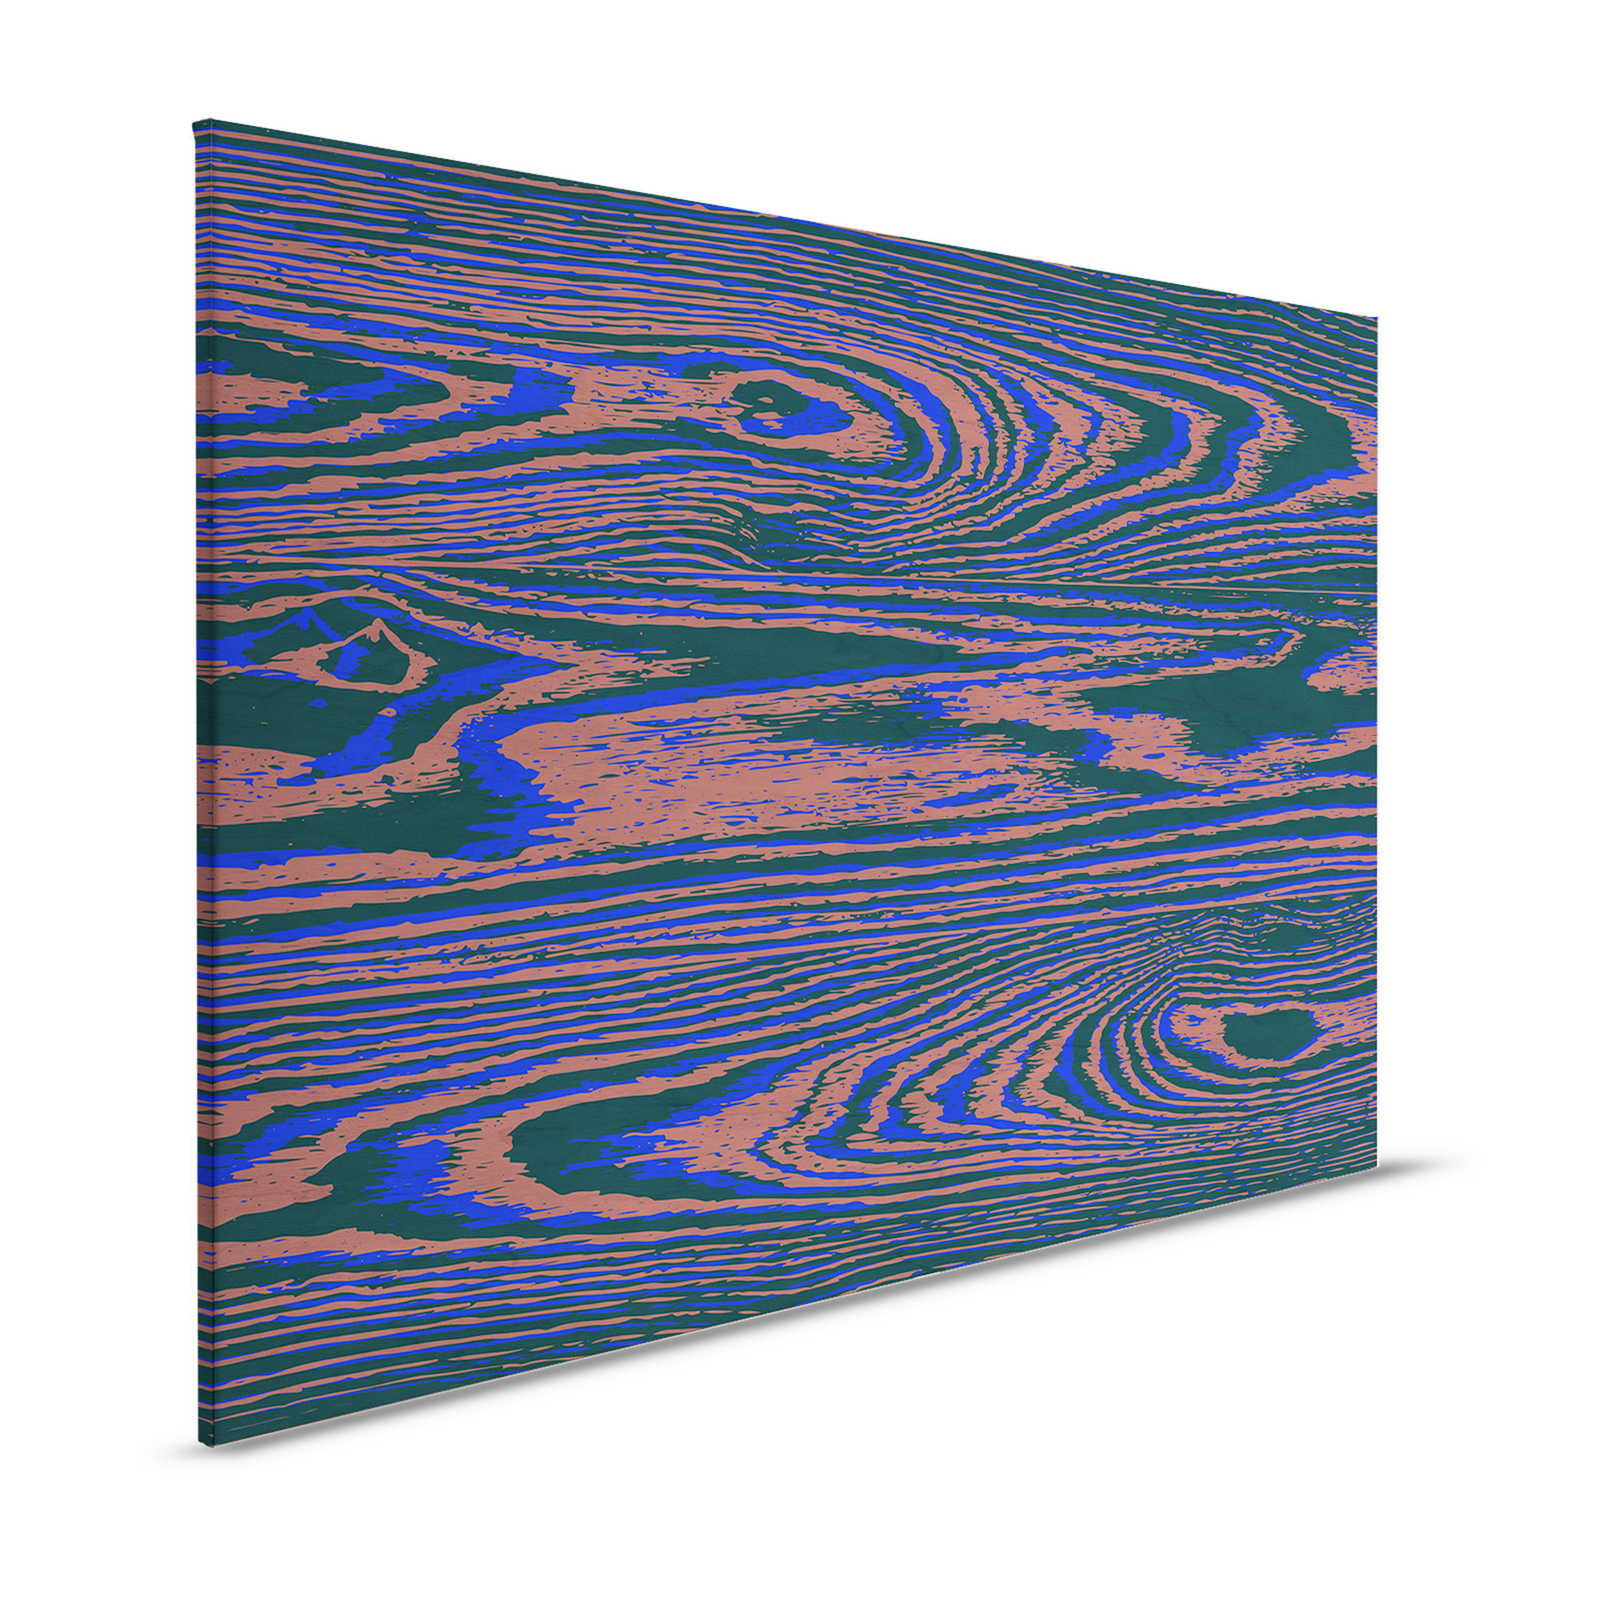 Kontiki 3 - Pintura sobre lienzo Grano de madera neón, morado y negro - 1,20 m x 0,80 m
